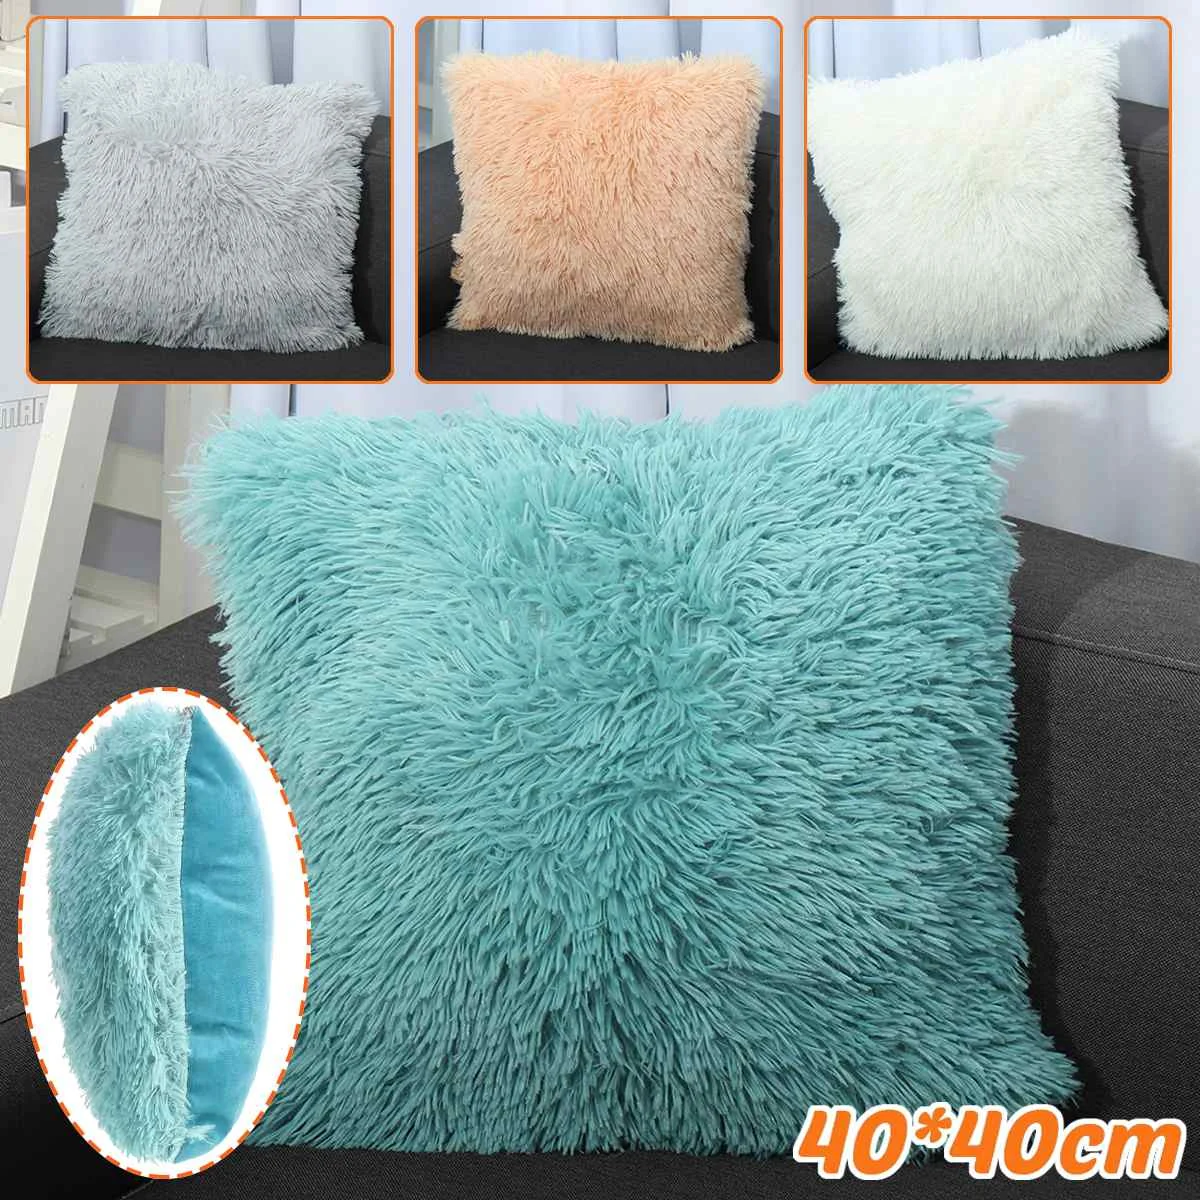 

Soft Fur Plush Pillow Case Shaggy Fluffy Cushion Cover For Bed Sofa Pillowcases Car Seat Living Room Home Decroative 40X40cm